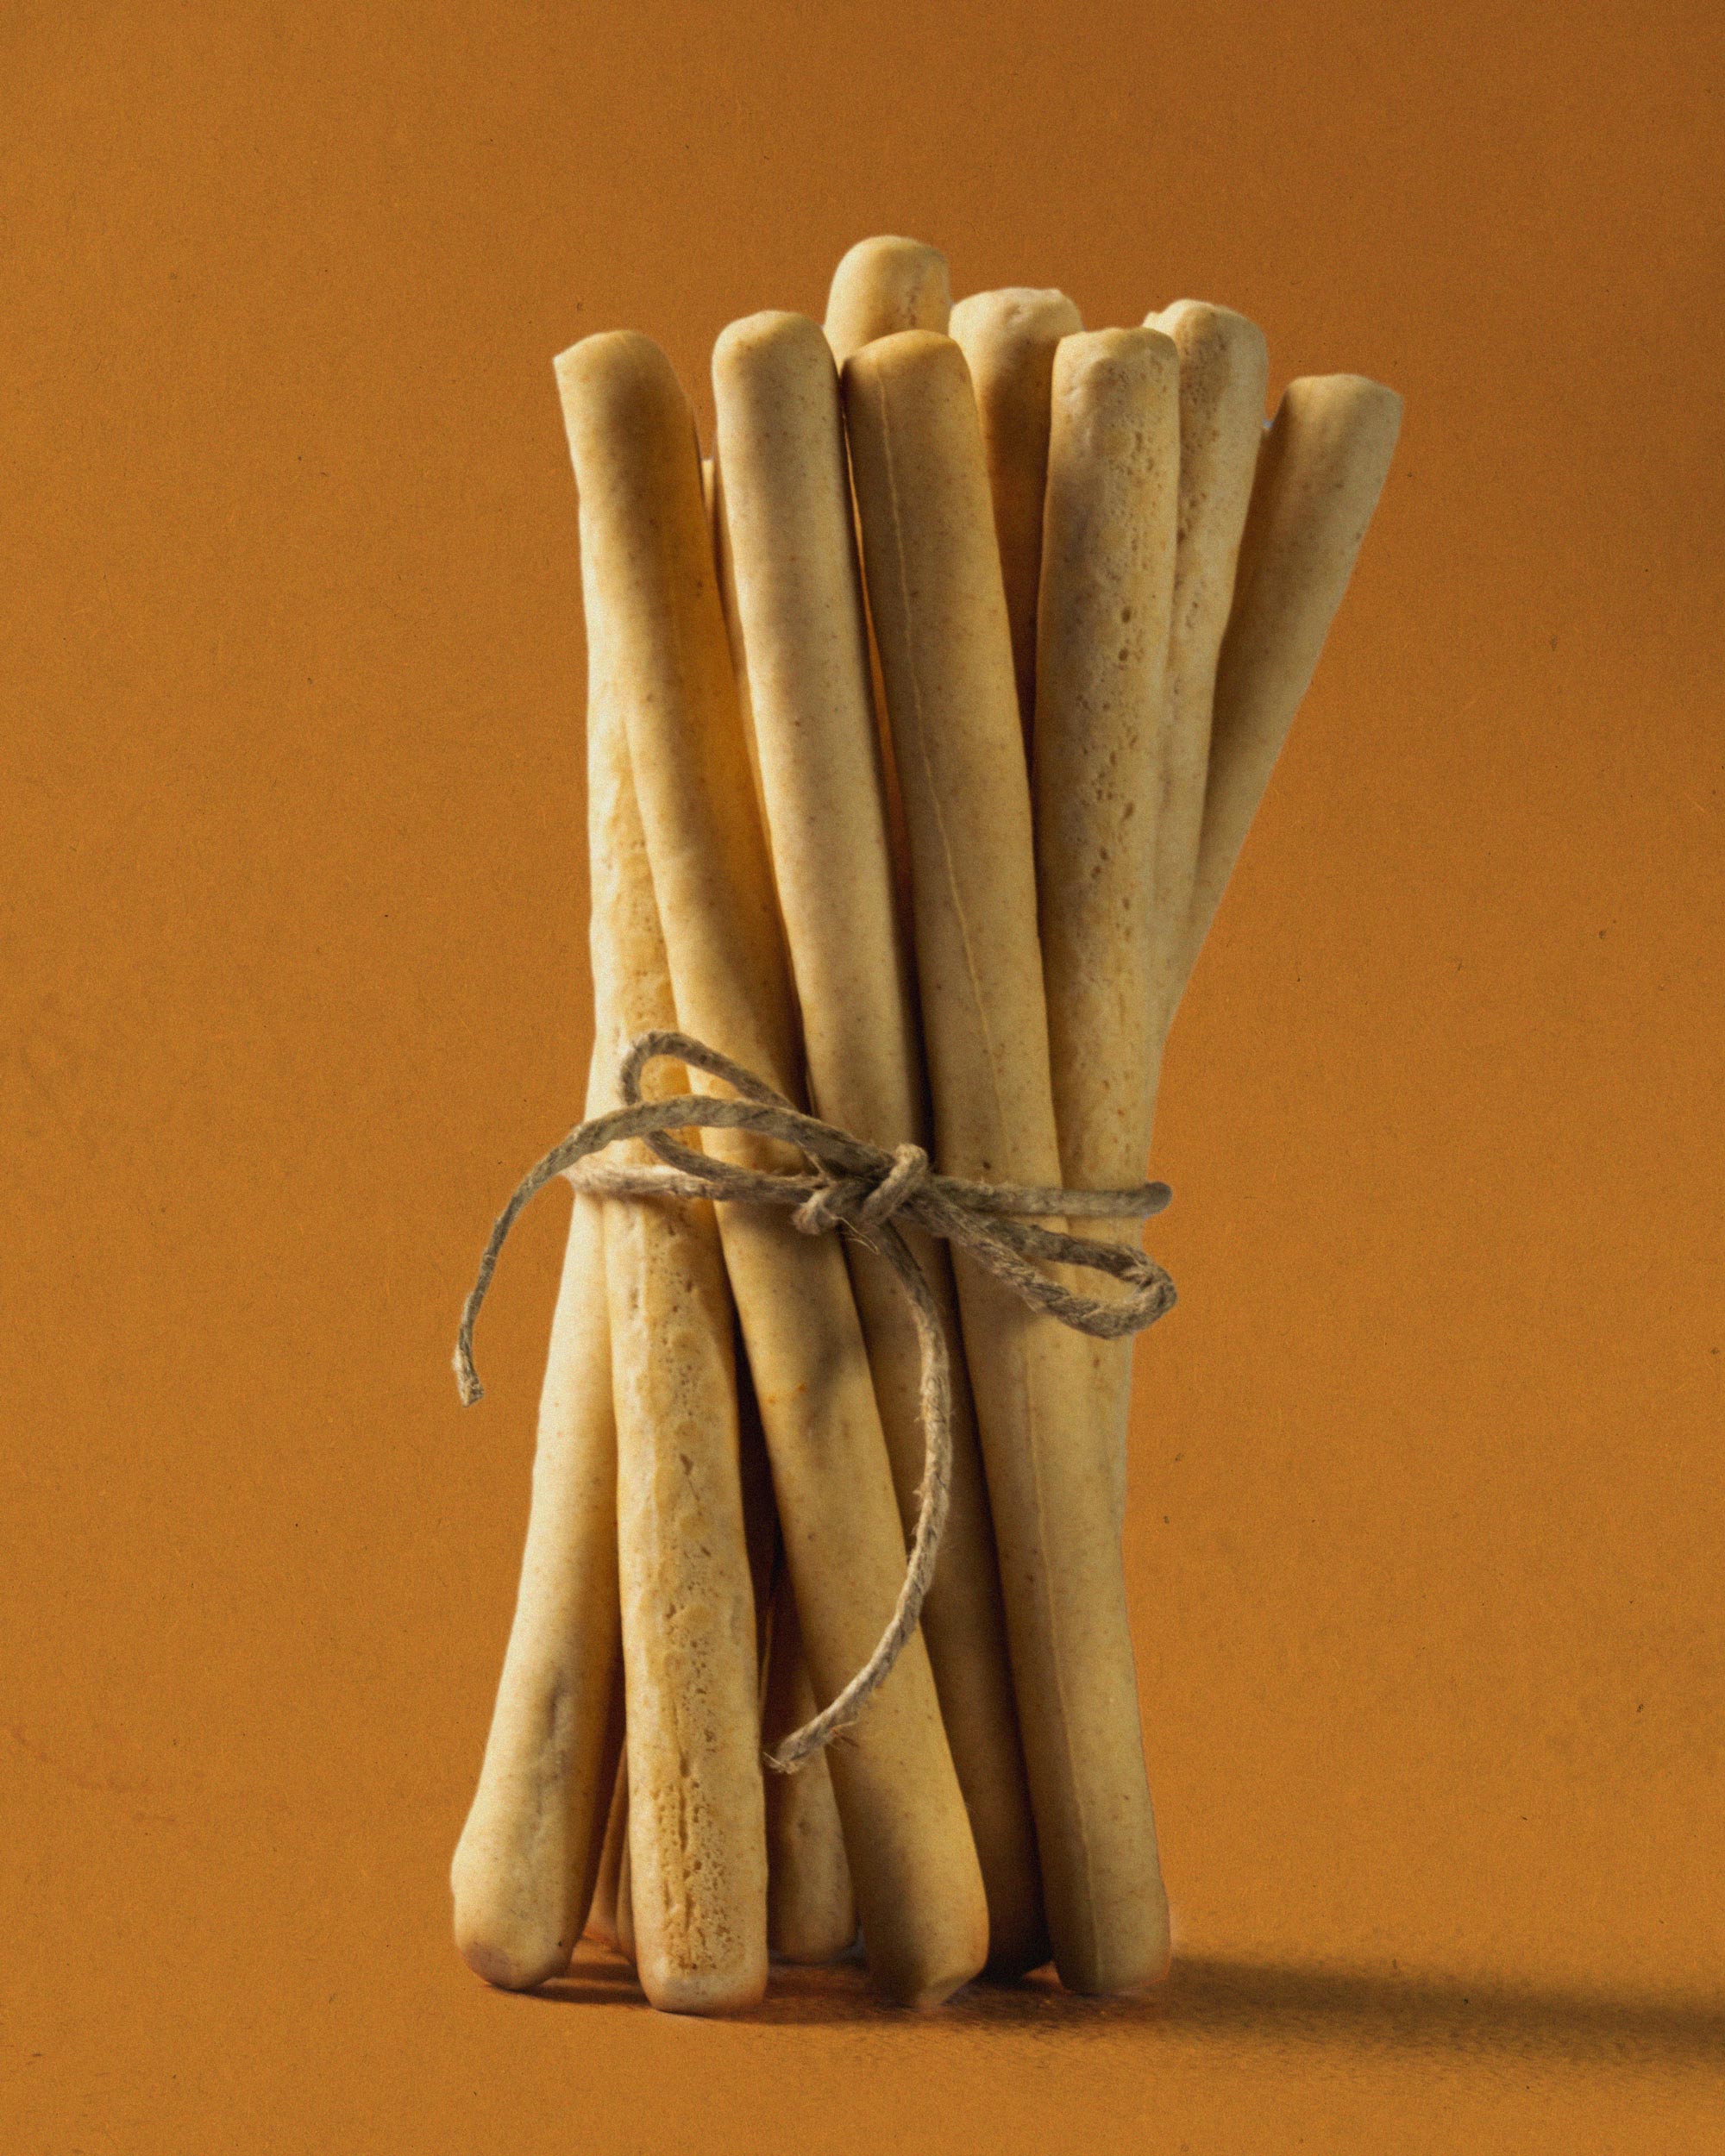 breadsticks bind